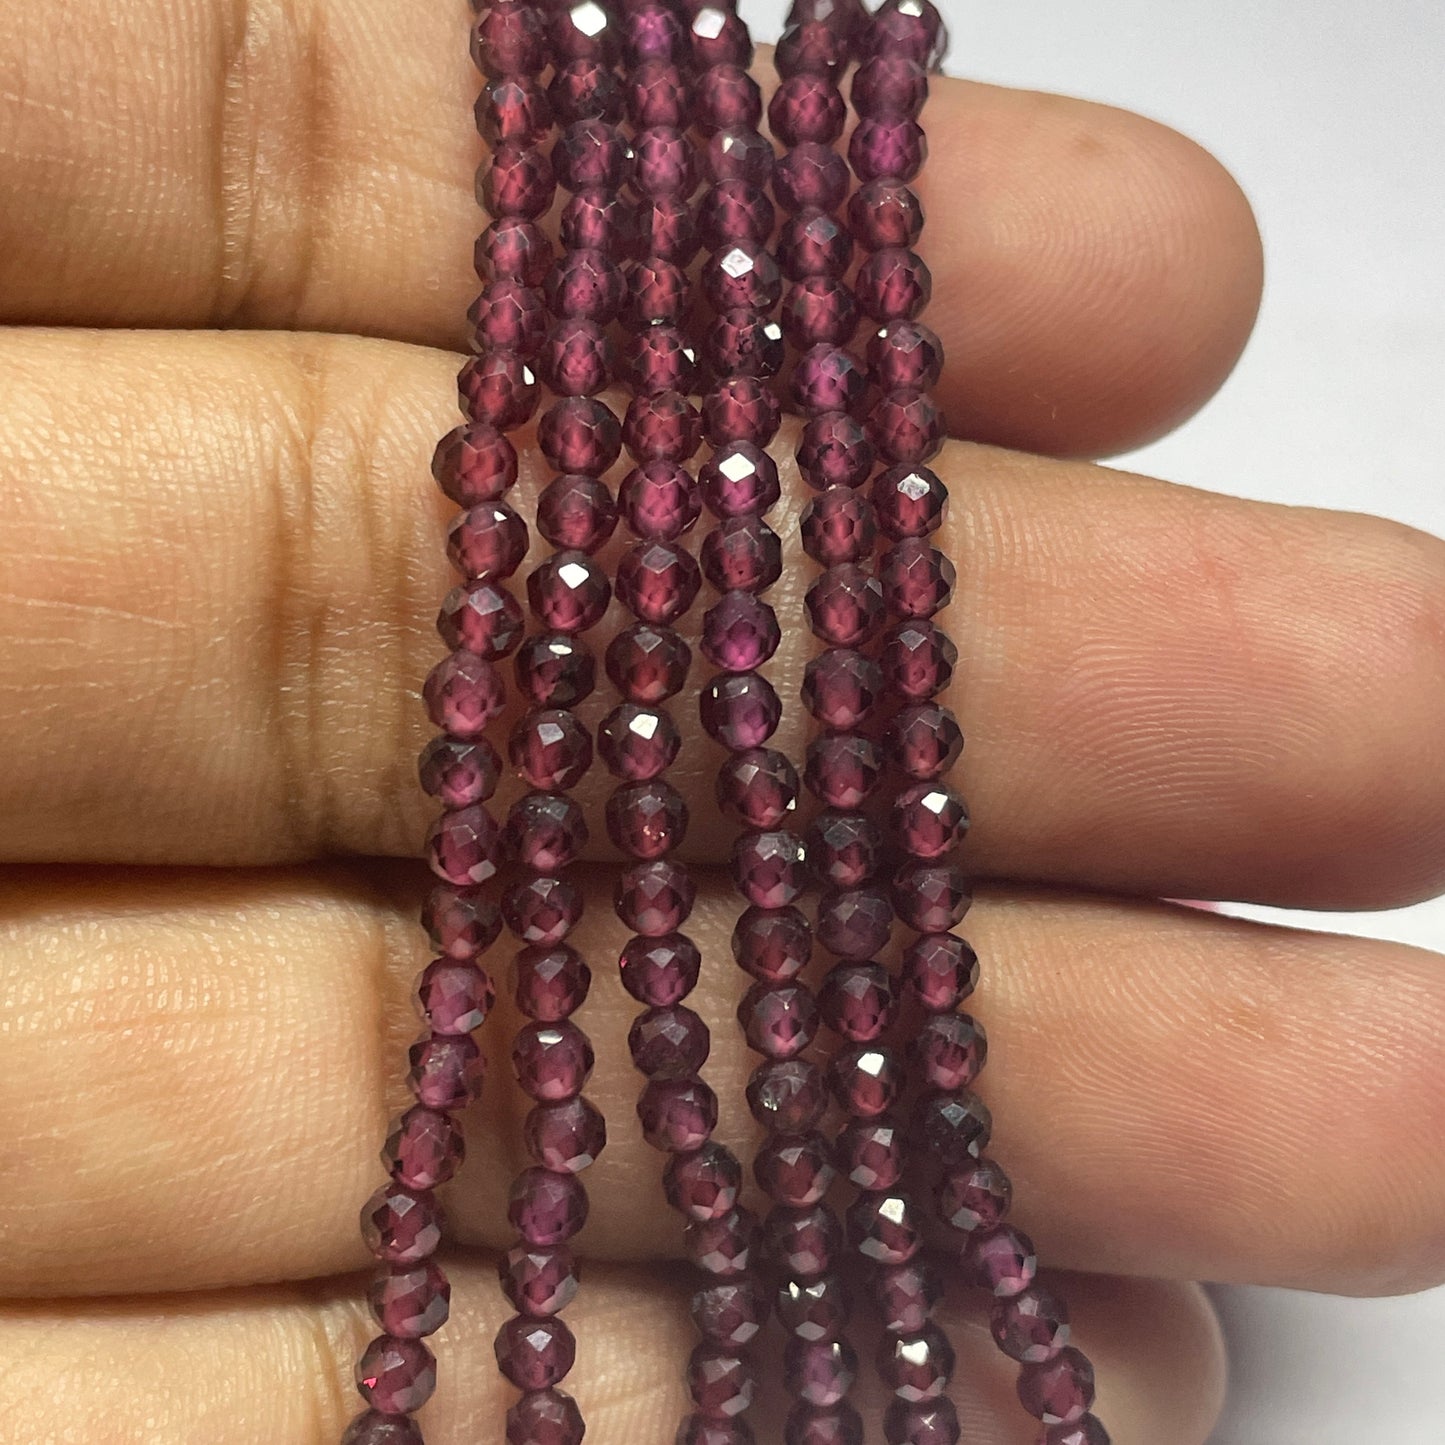 Natural Garnet Faceted Cut Beads (Natural)